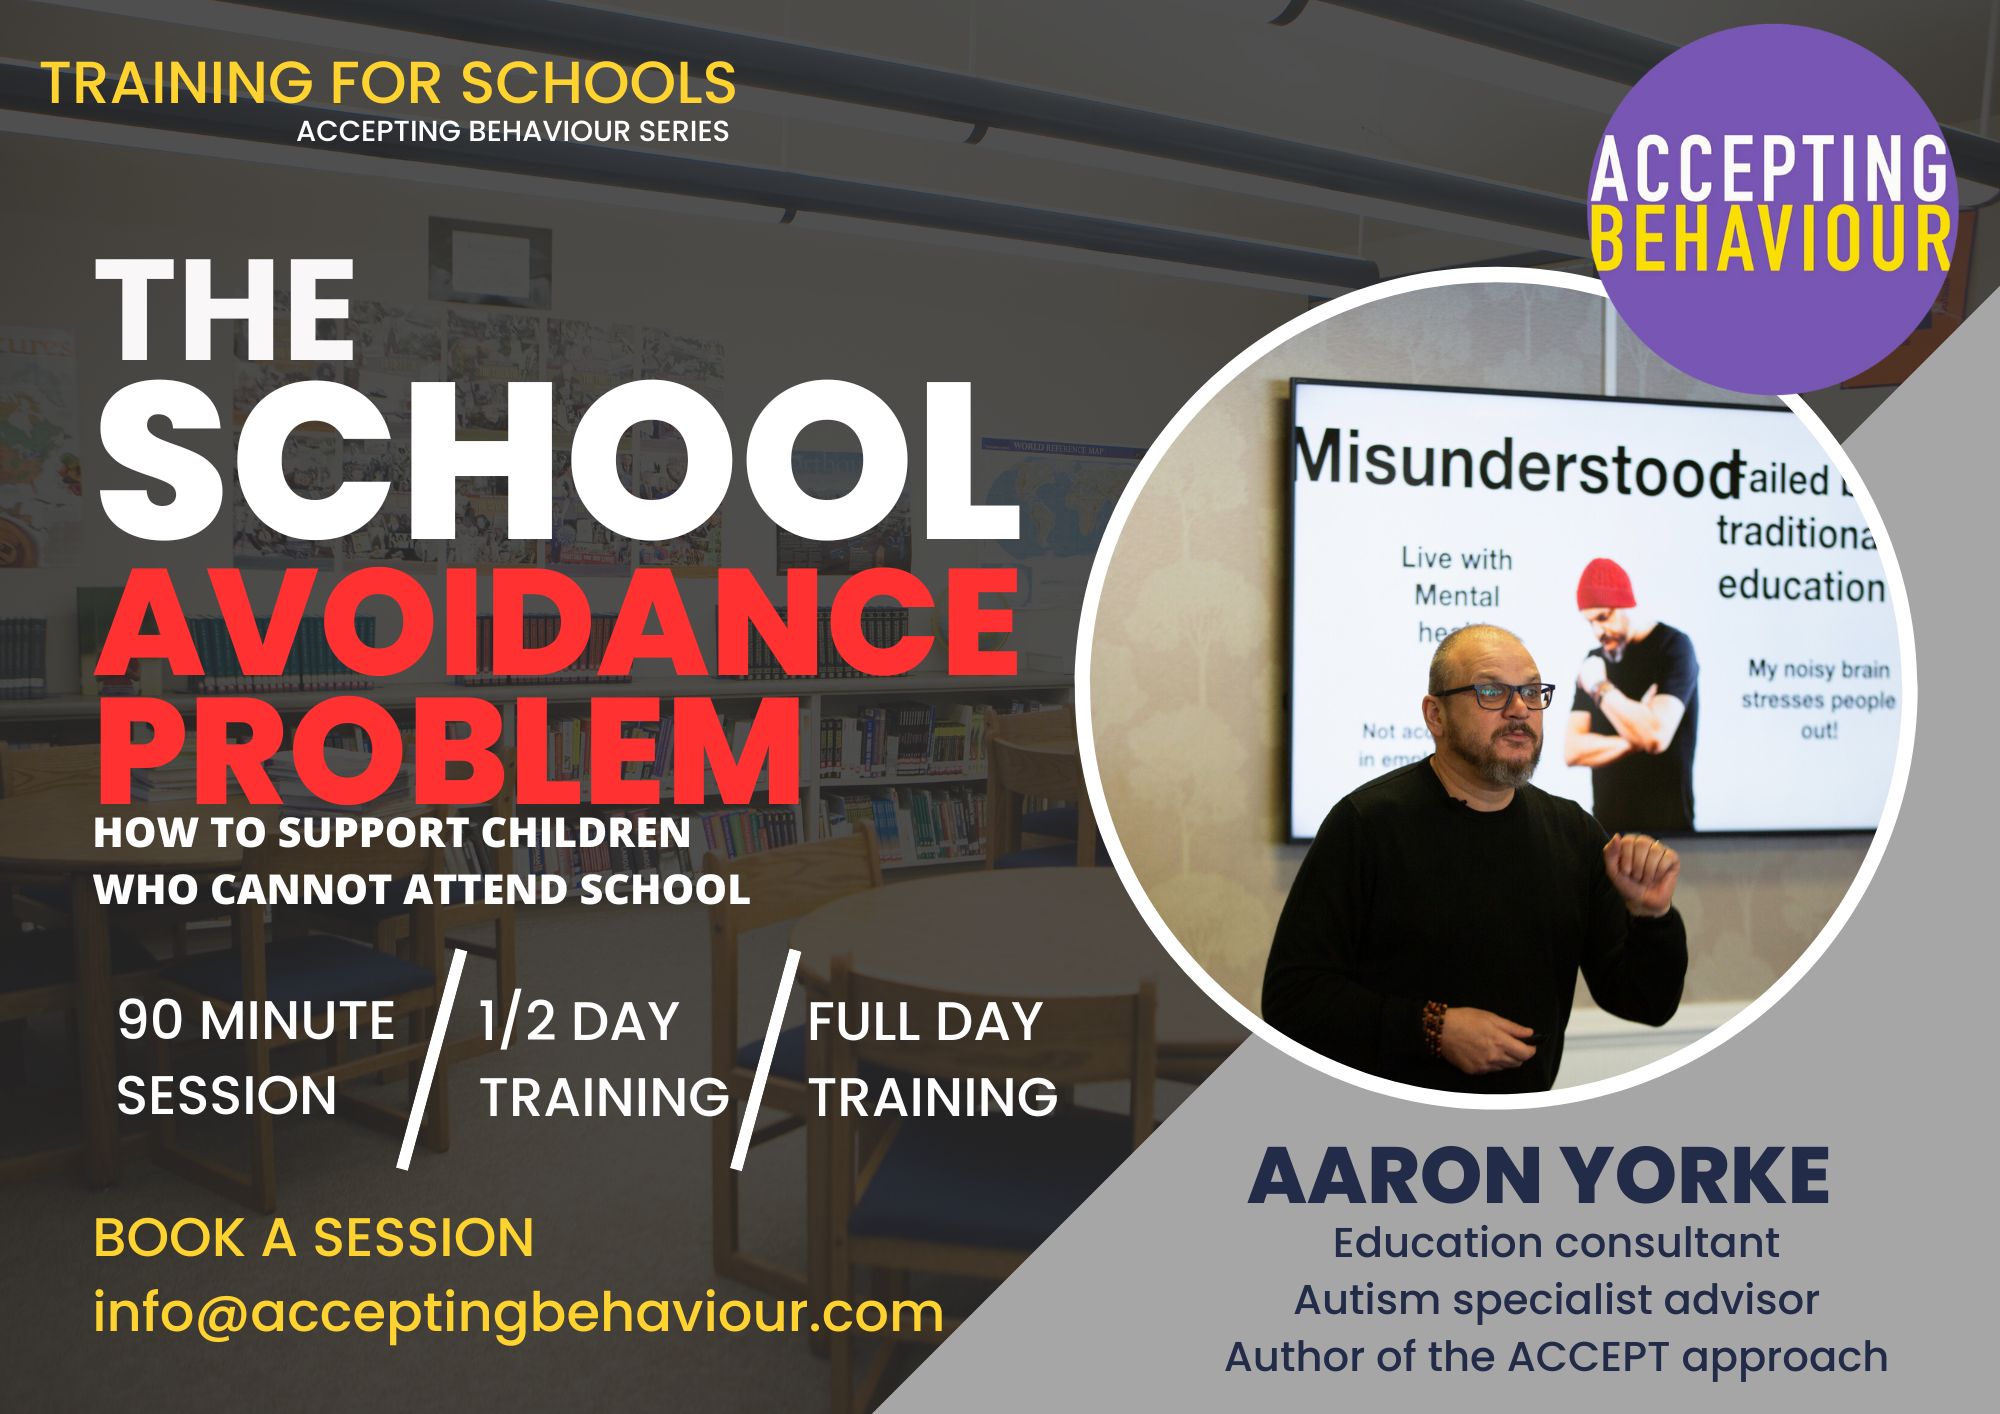 School avoidance training advertisement with speaker presenting.